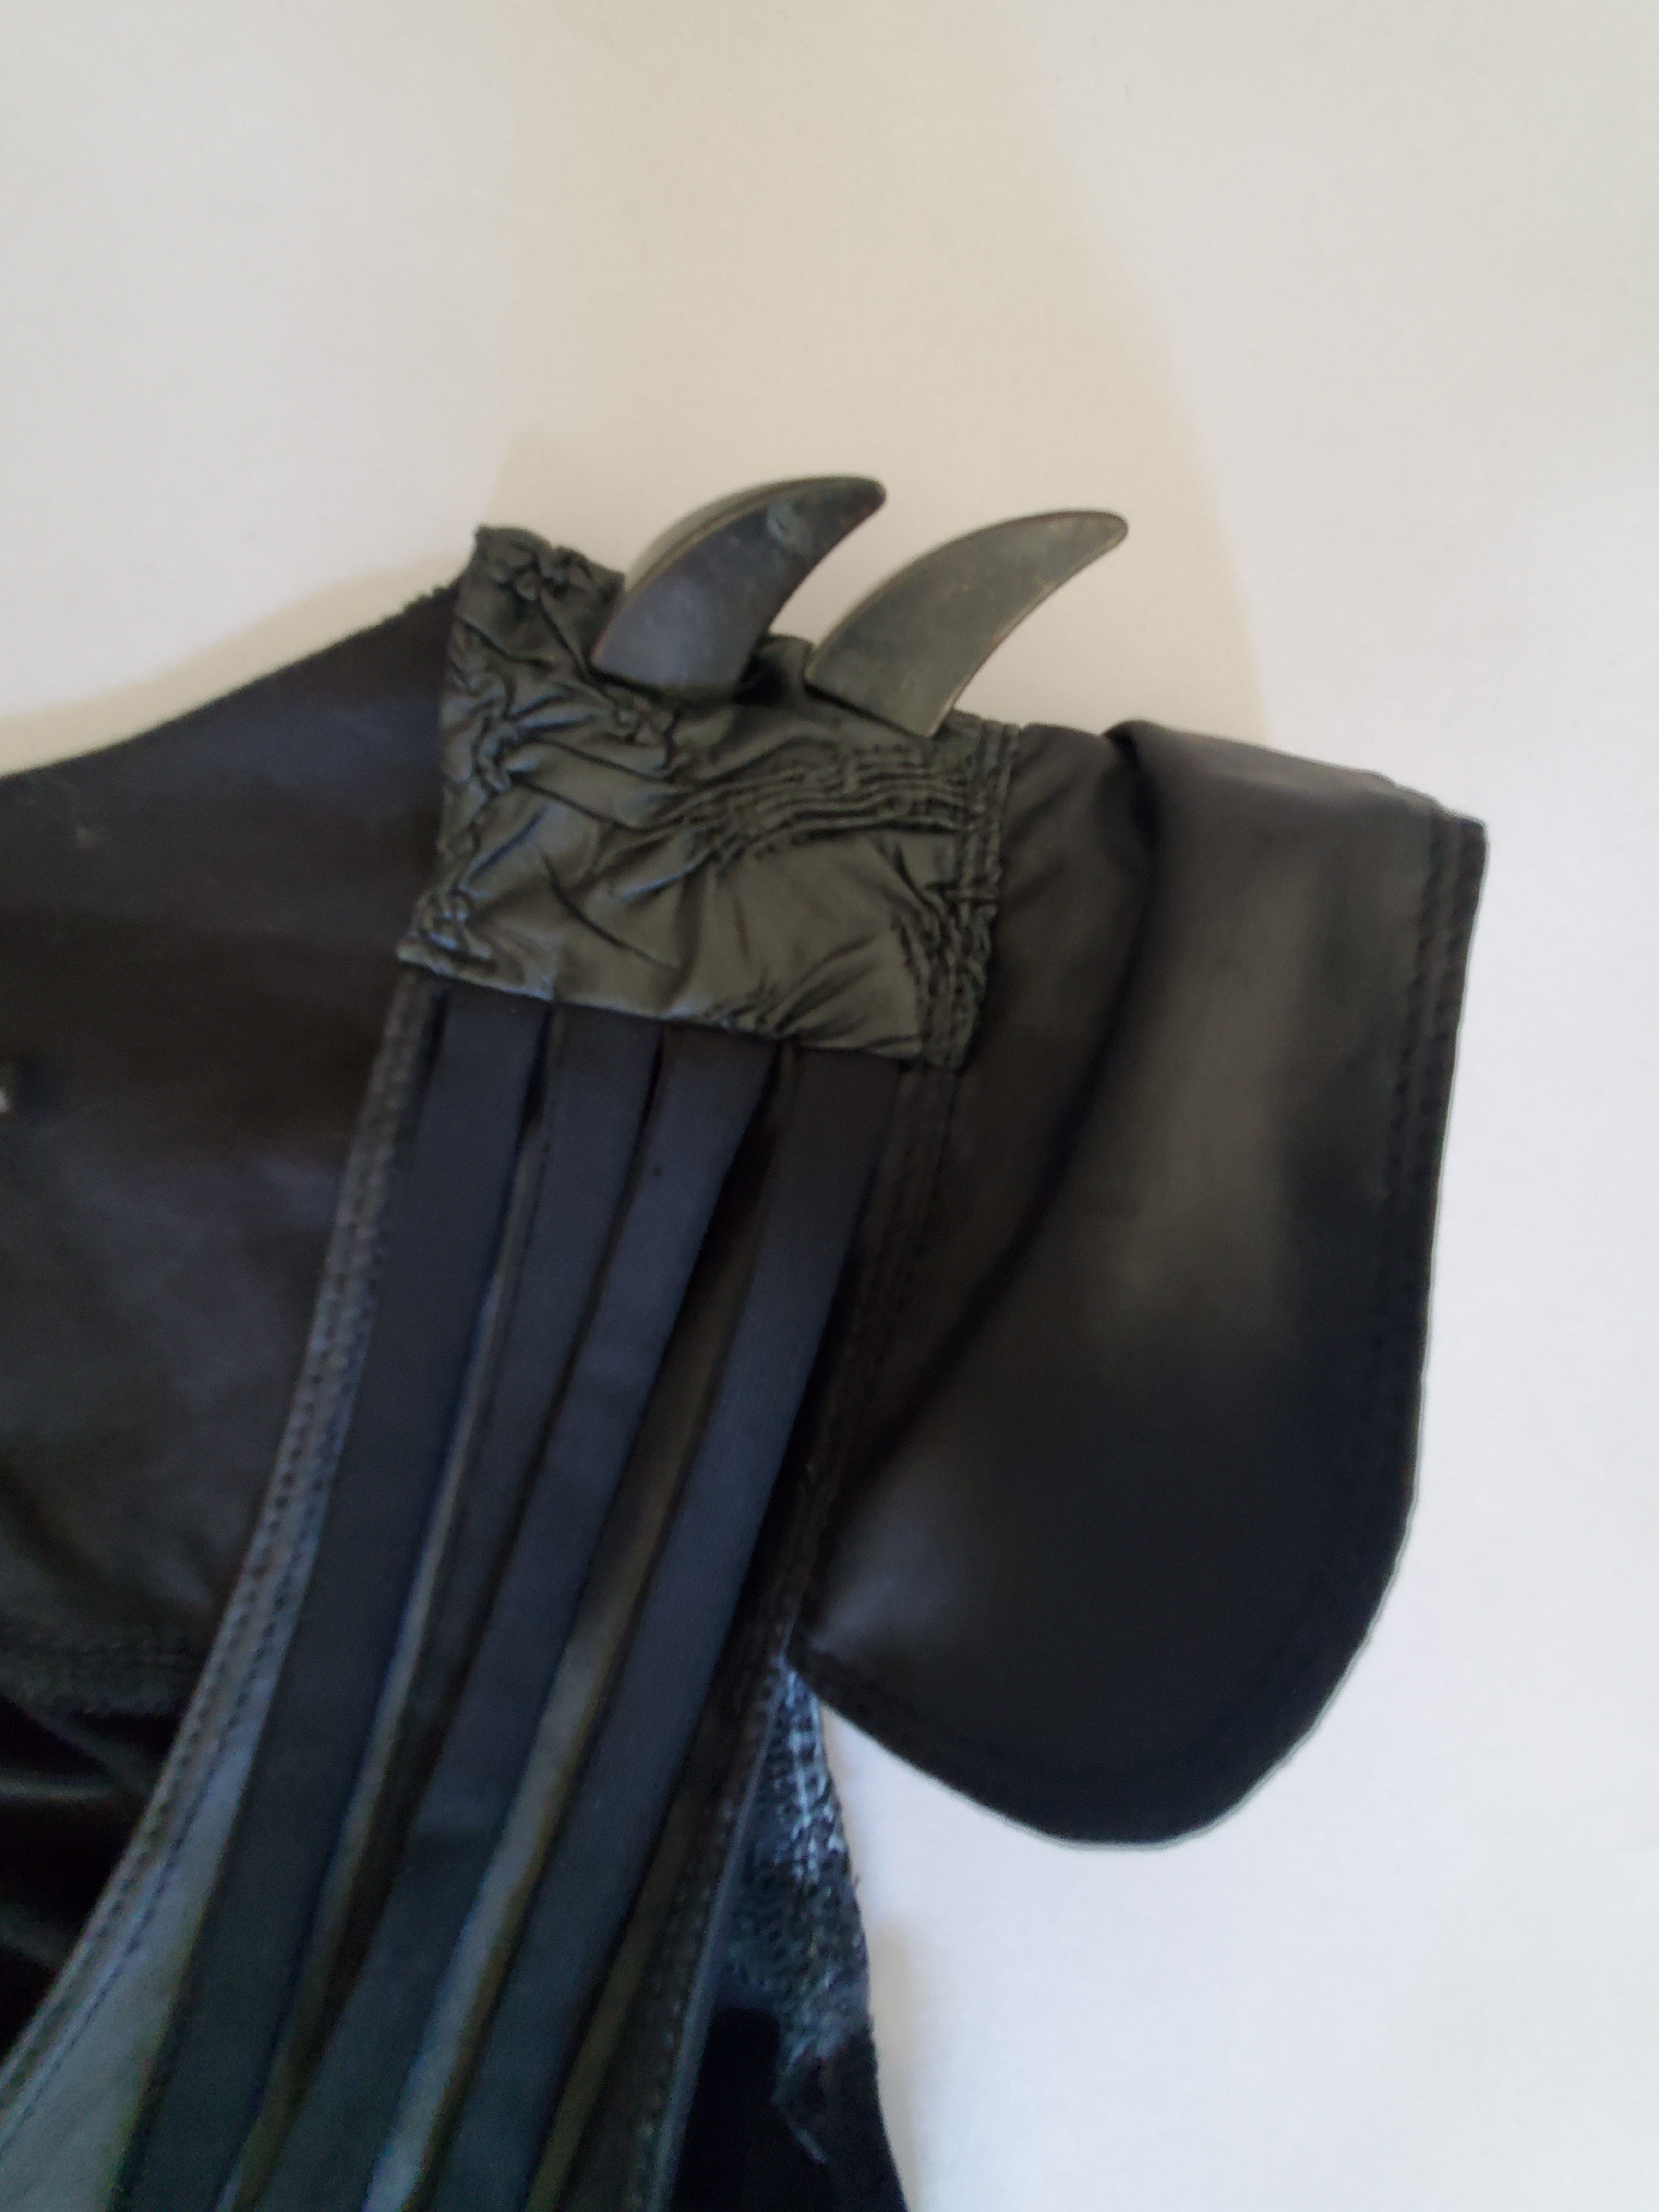 Cyber Claw Black Matte Spandex Mini Dress - size M